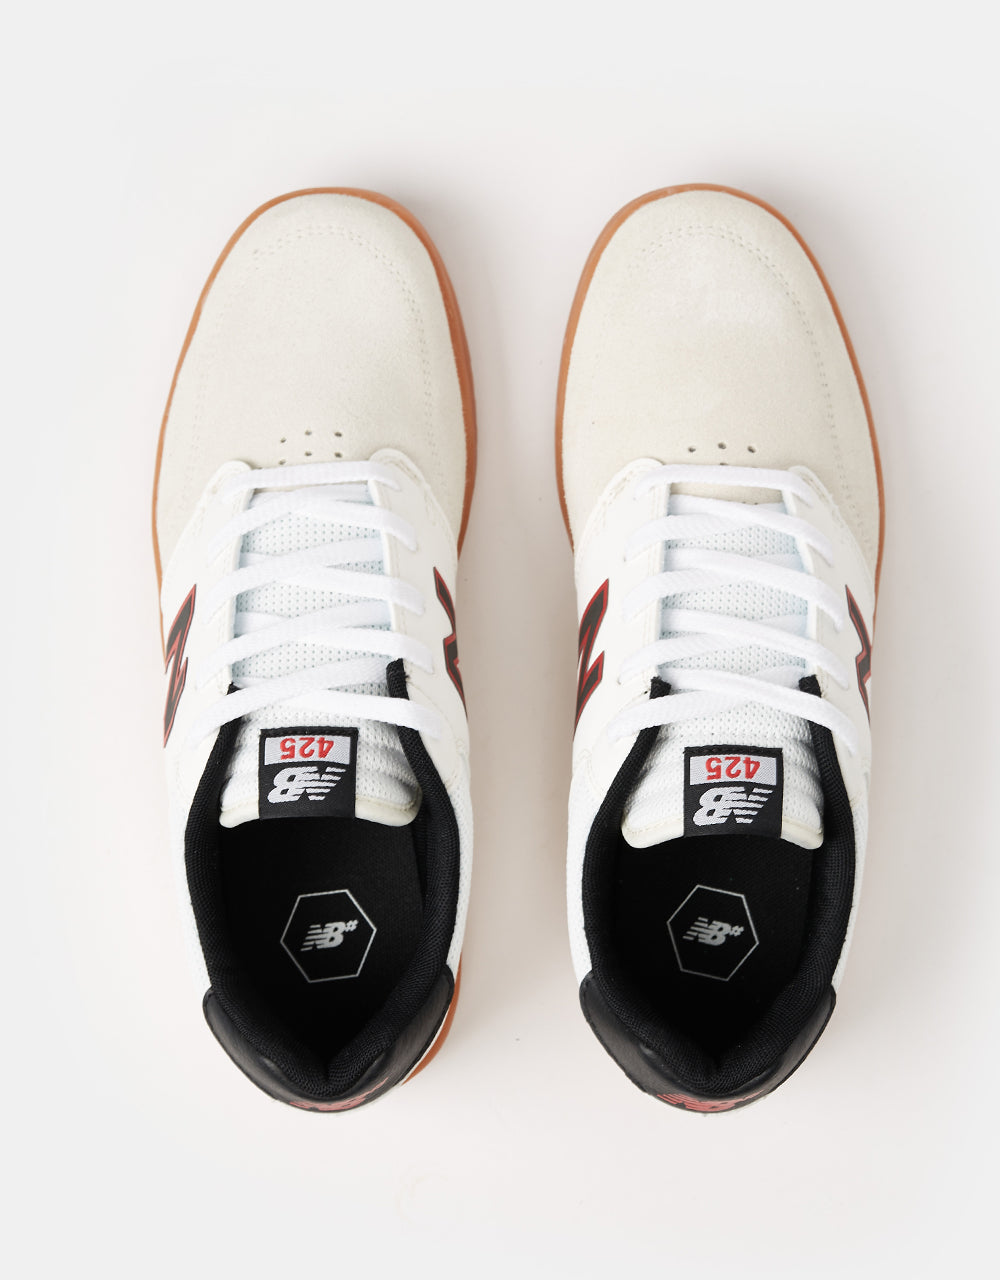 New Balance Numeric 425 Skate Shoes - White/Gum